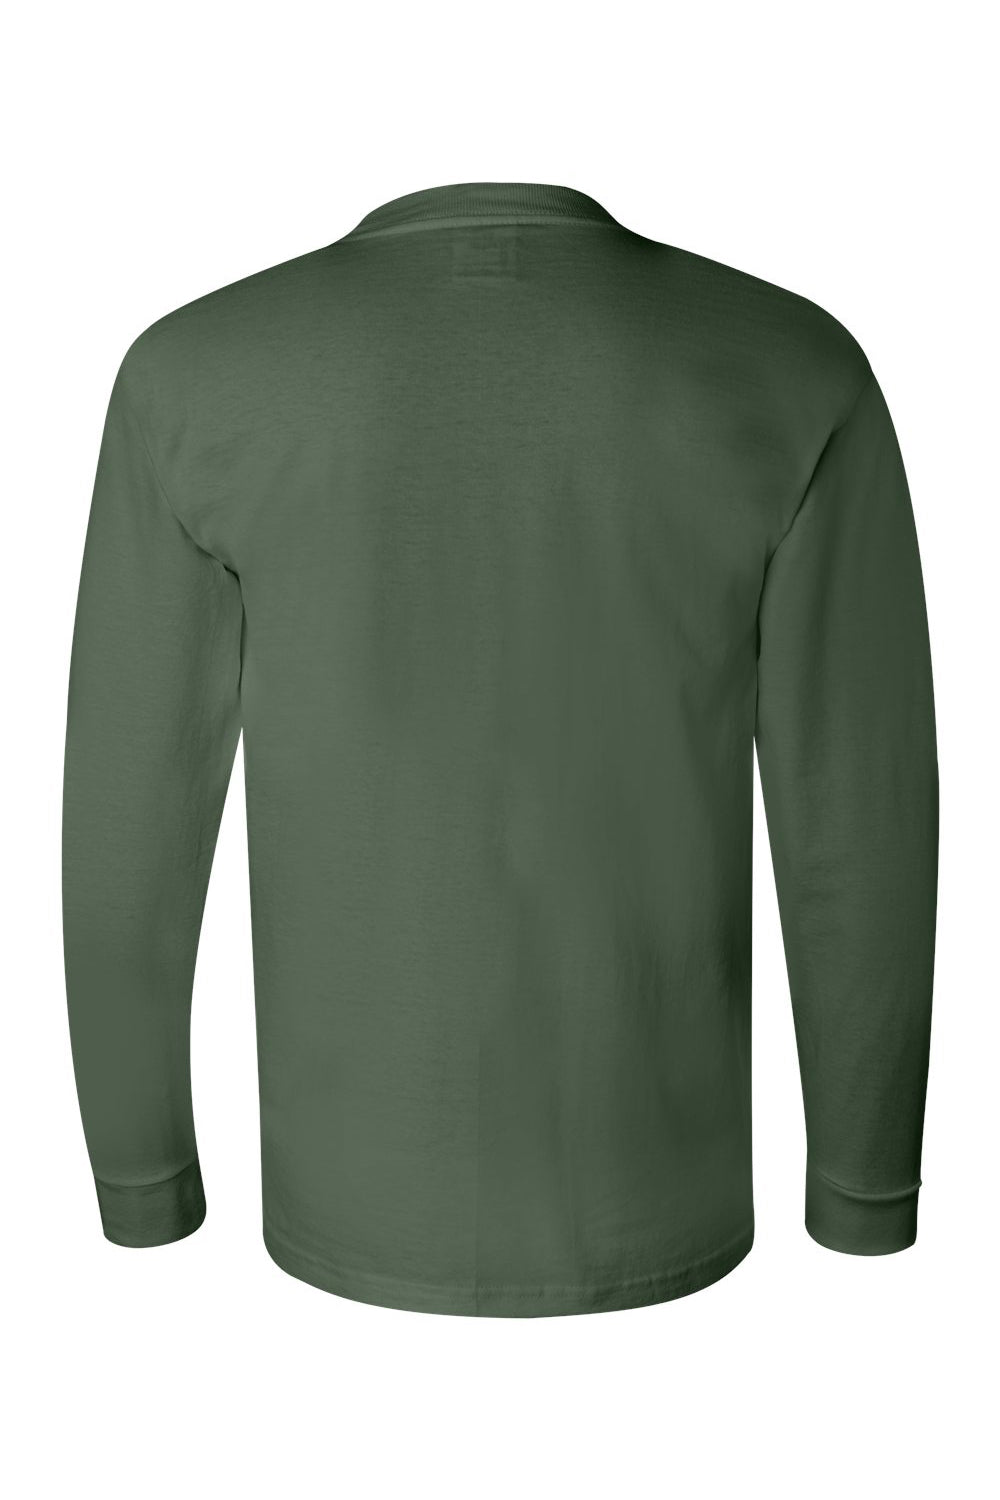 Bayside BA6100 Mens USA Made Long Sleeve Crewneck T-Shirt Forest Green Flat Back